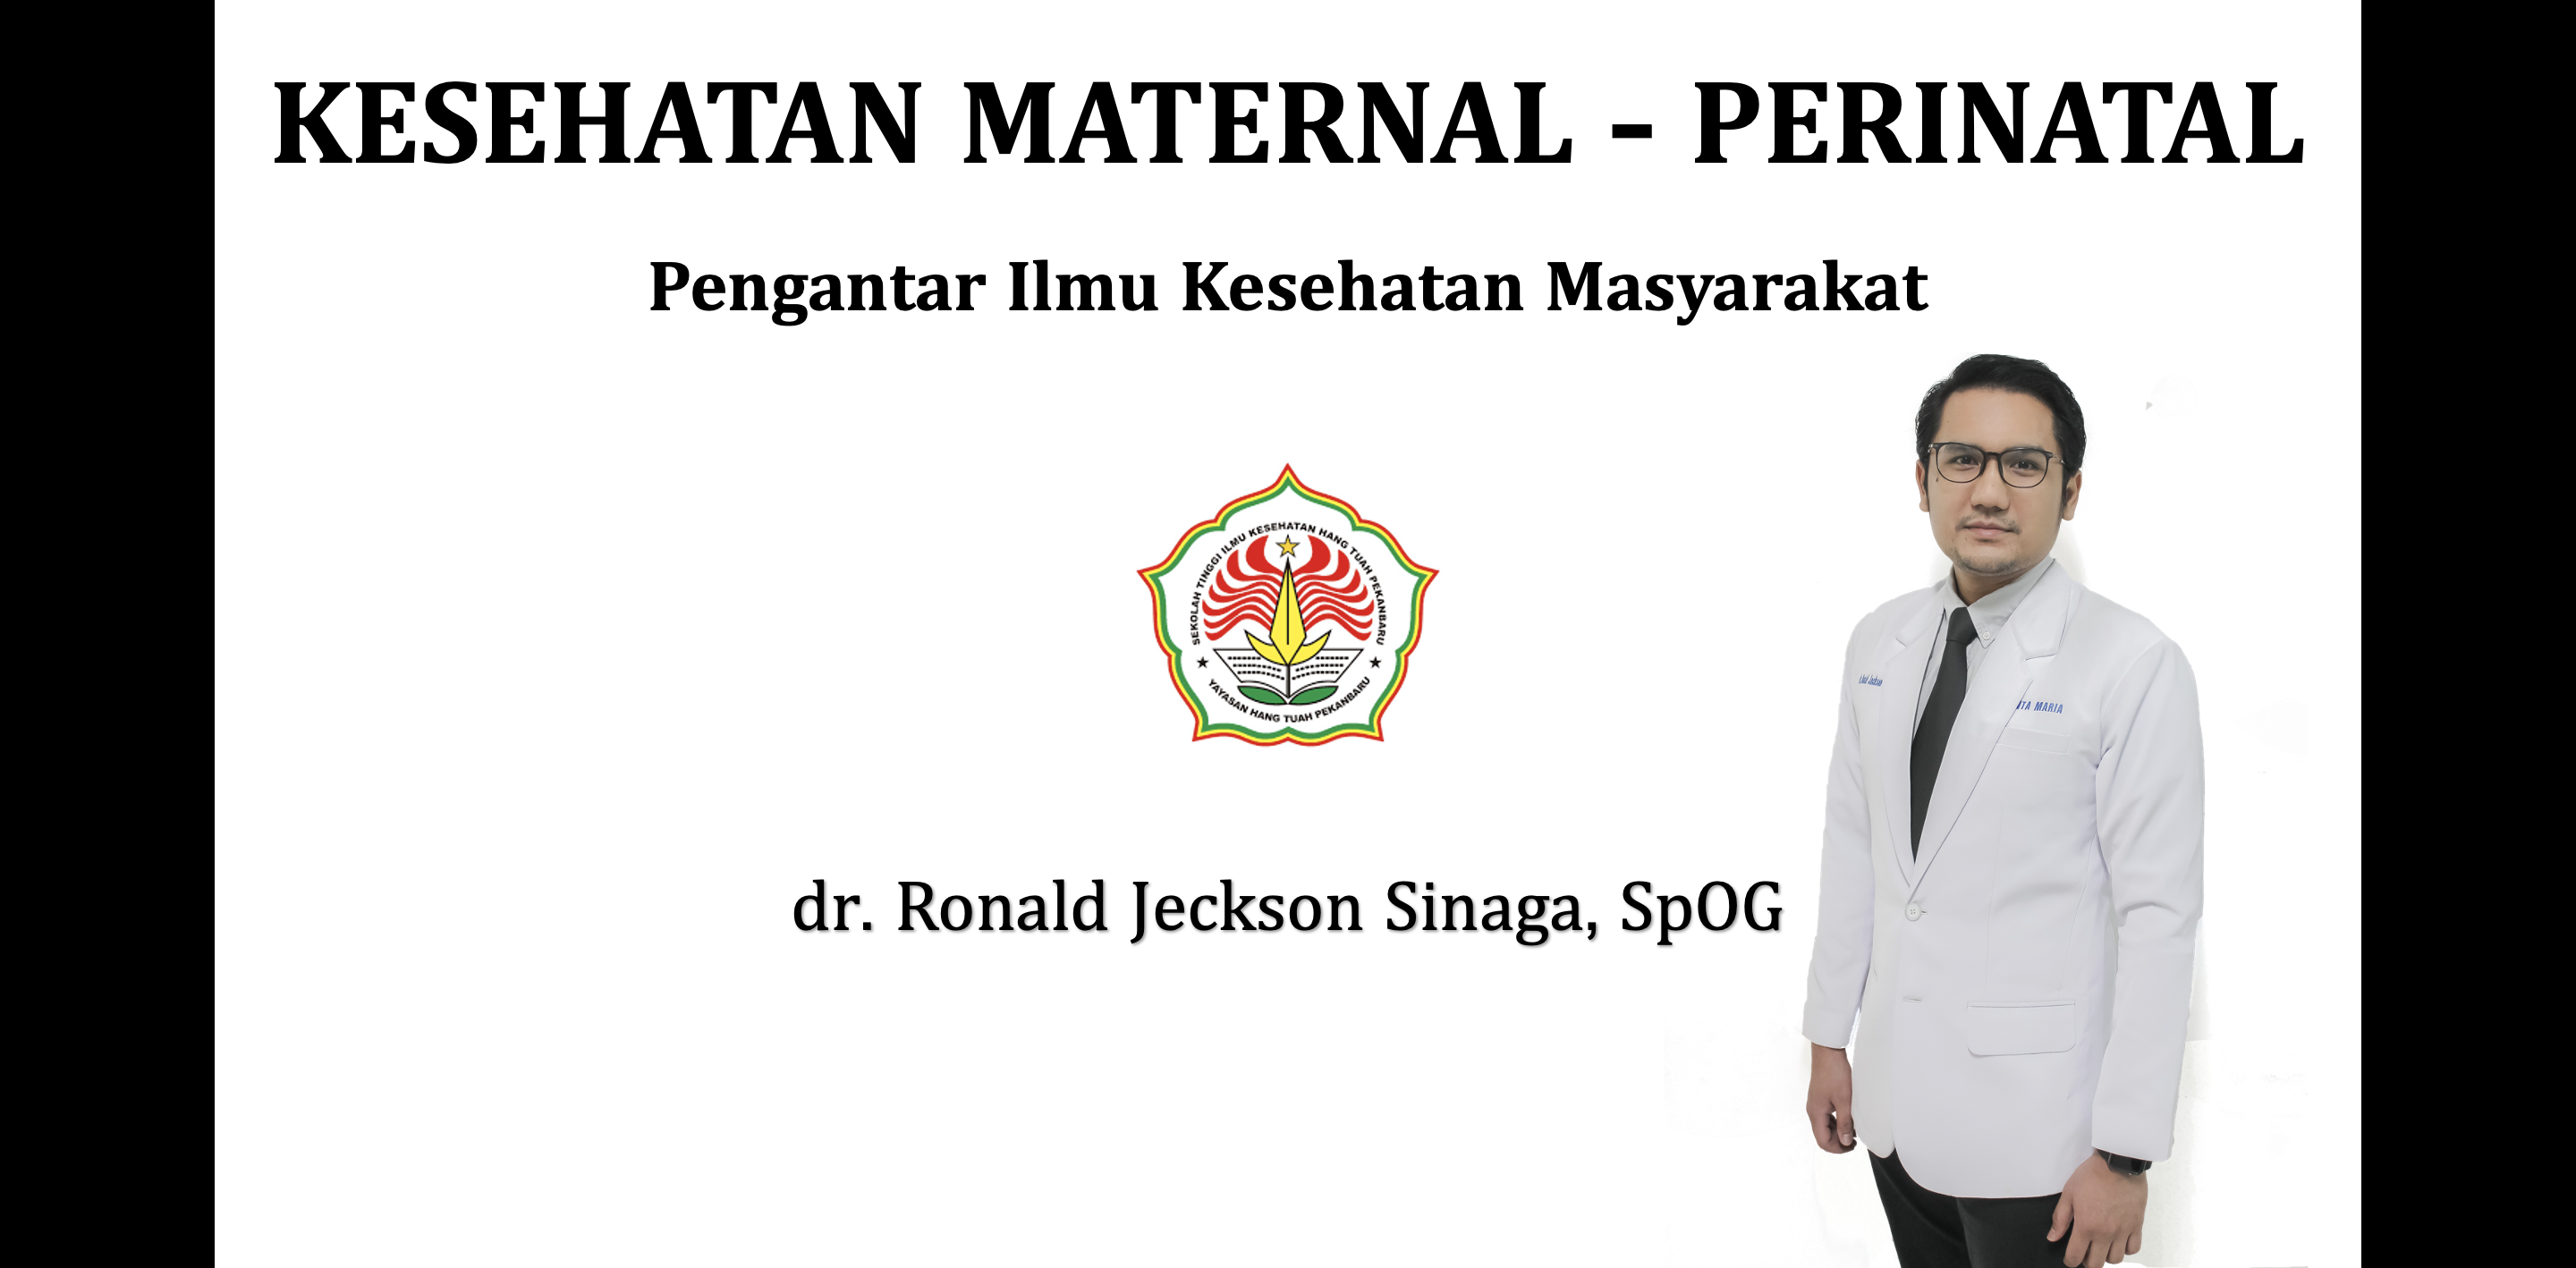 KESEHATAN MATERNAL - KESPRO SEM 5A REG &amp; 3B REG - dr. Ronald Jackson Sinaga, SpOG